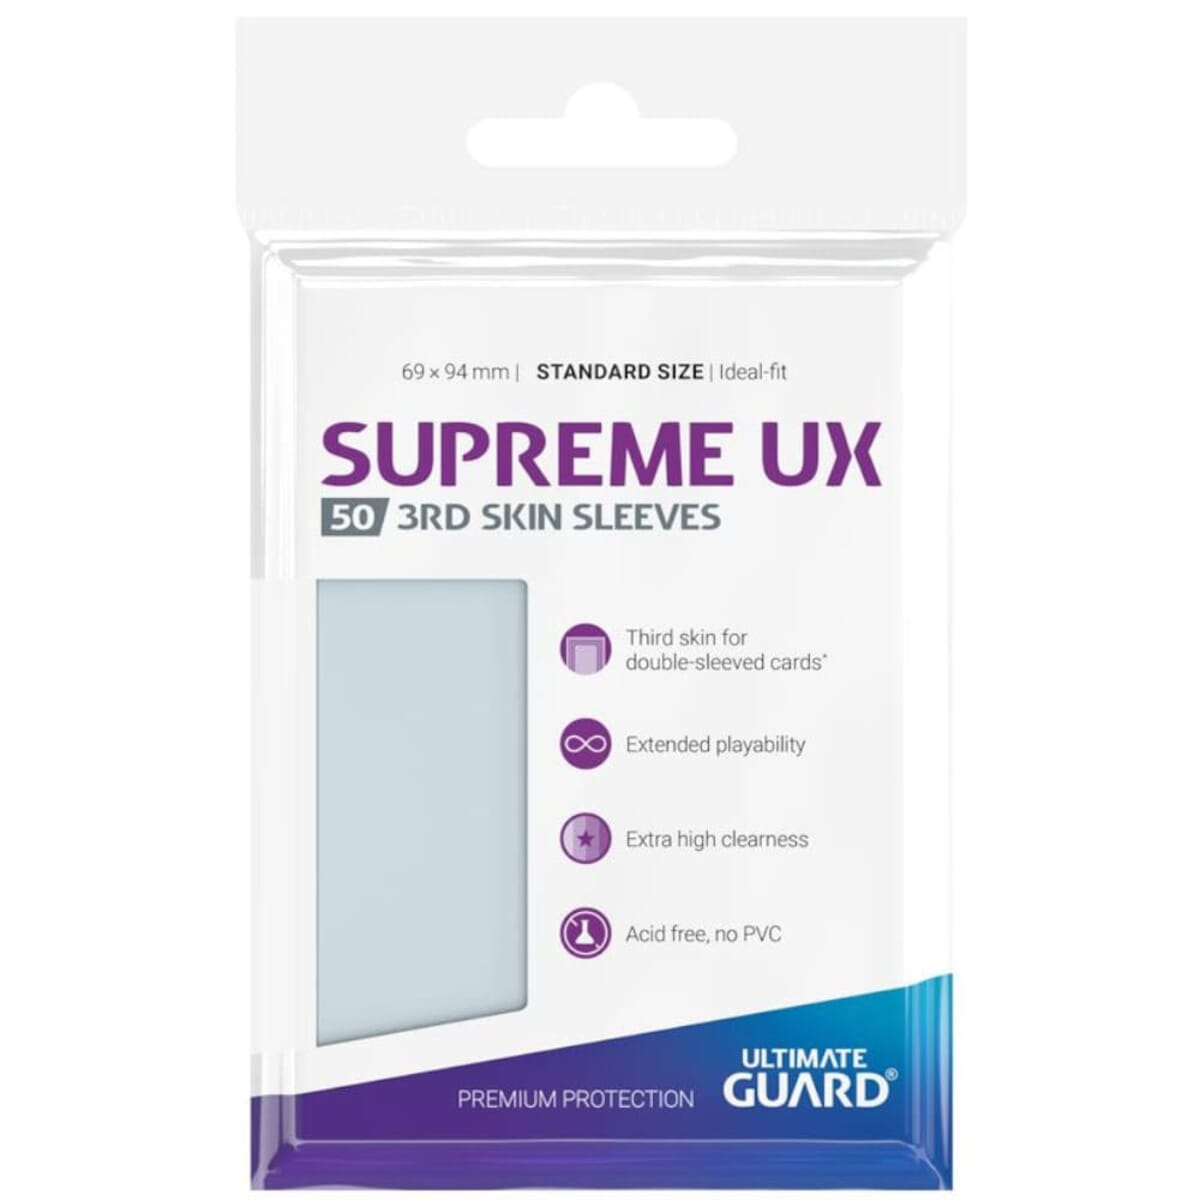 ULTIMATE GUARD Standard Size Skin Sleeves Sammelkarten 50 UX 3rd Stück Supreme